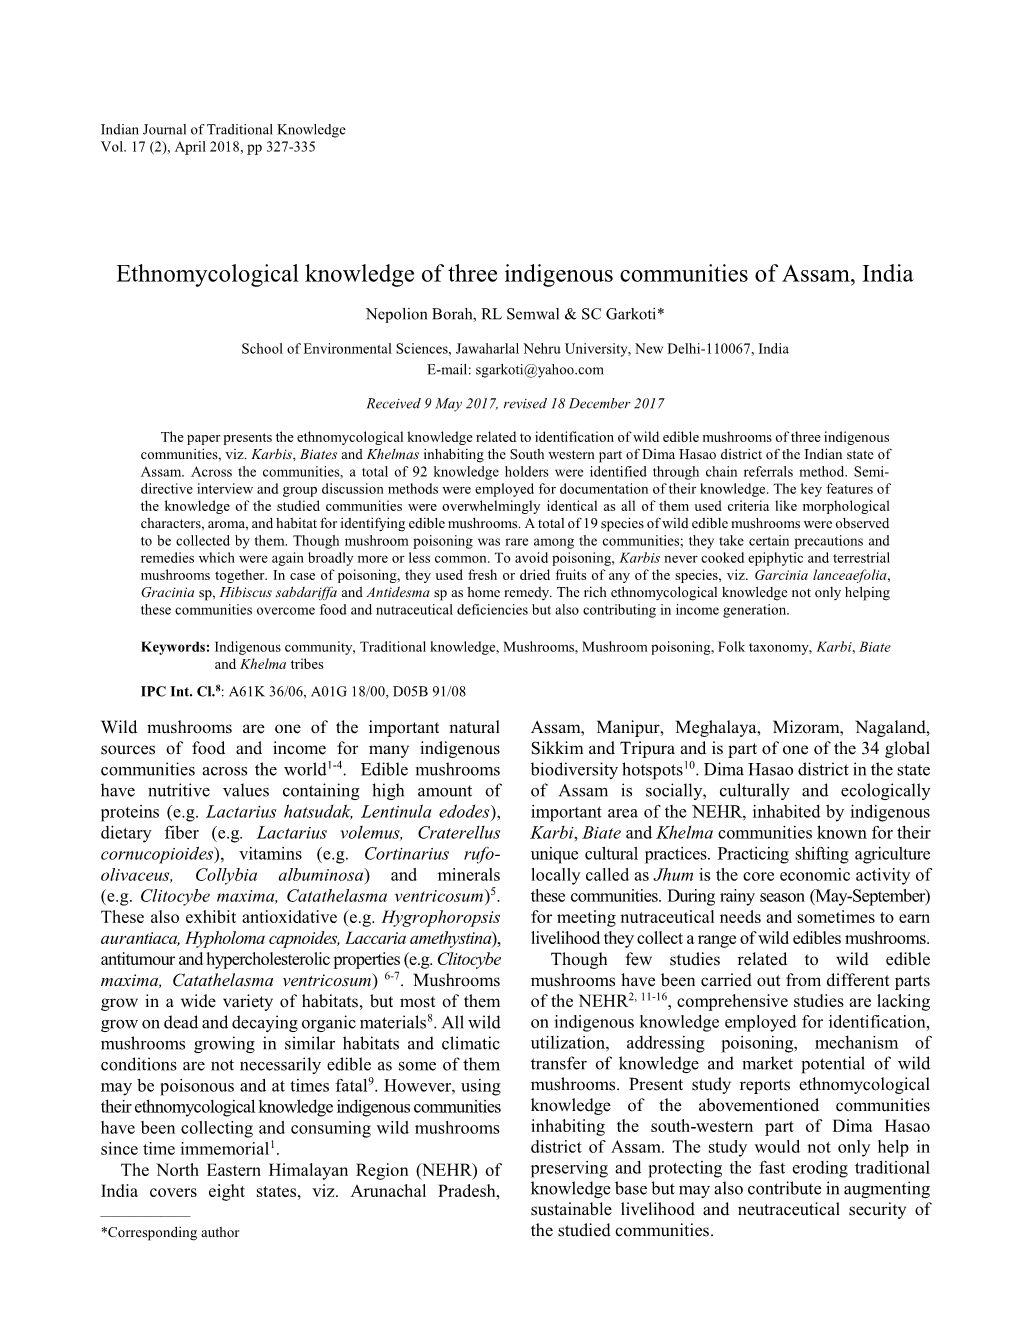 Ethnomycological Knowledge of Three Indigenous Communities of Assam, India